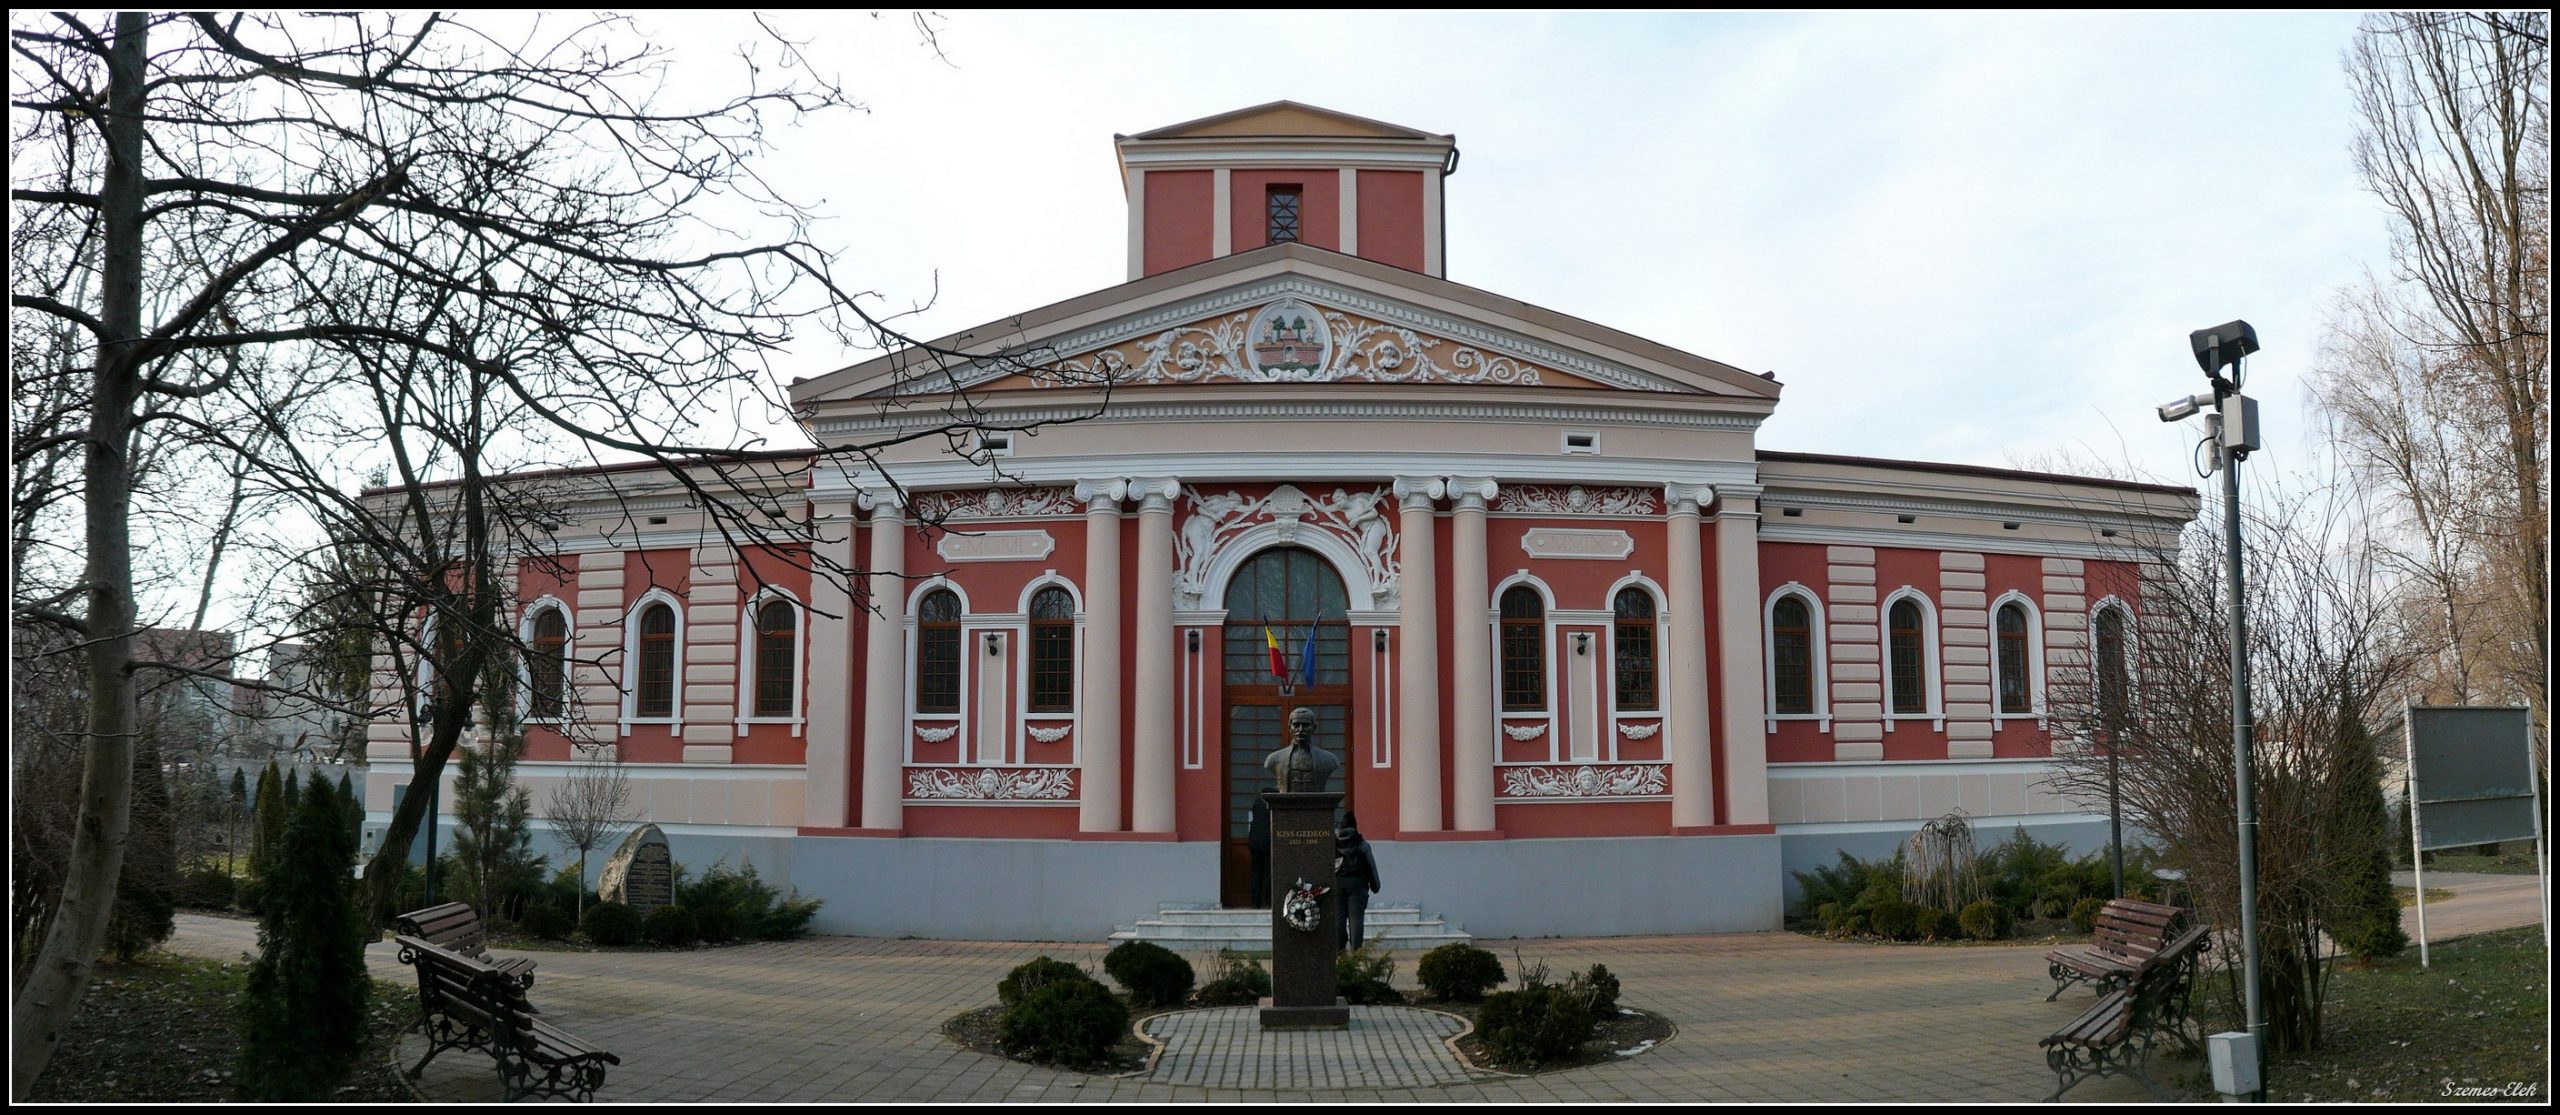 Satu Mare - Romania - beautiful classic building